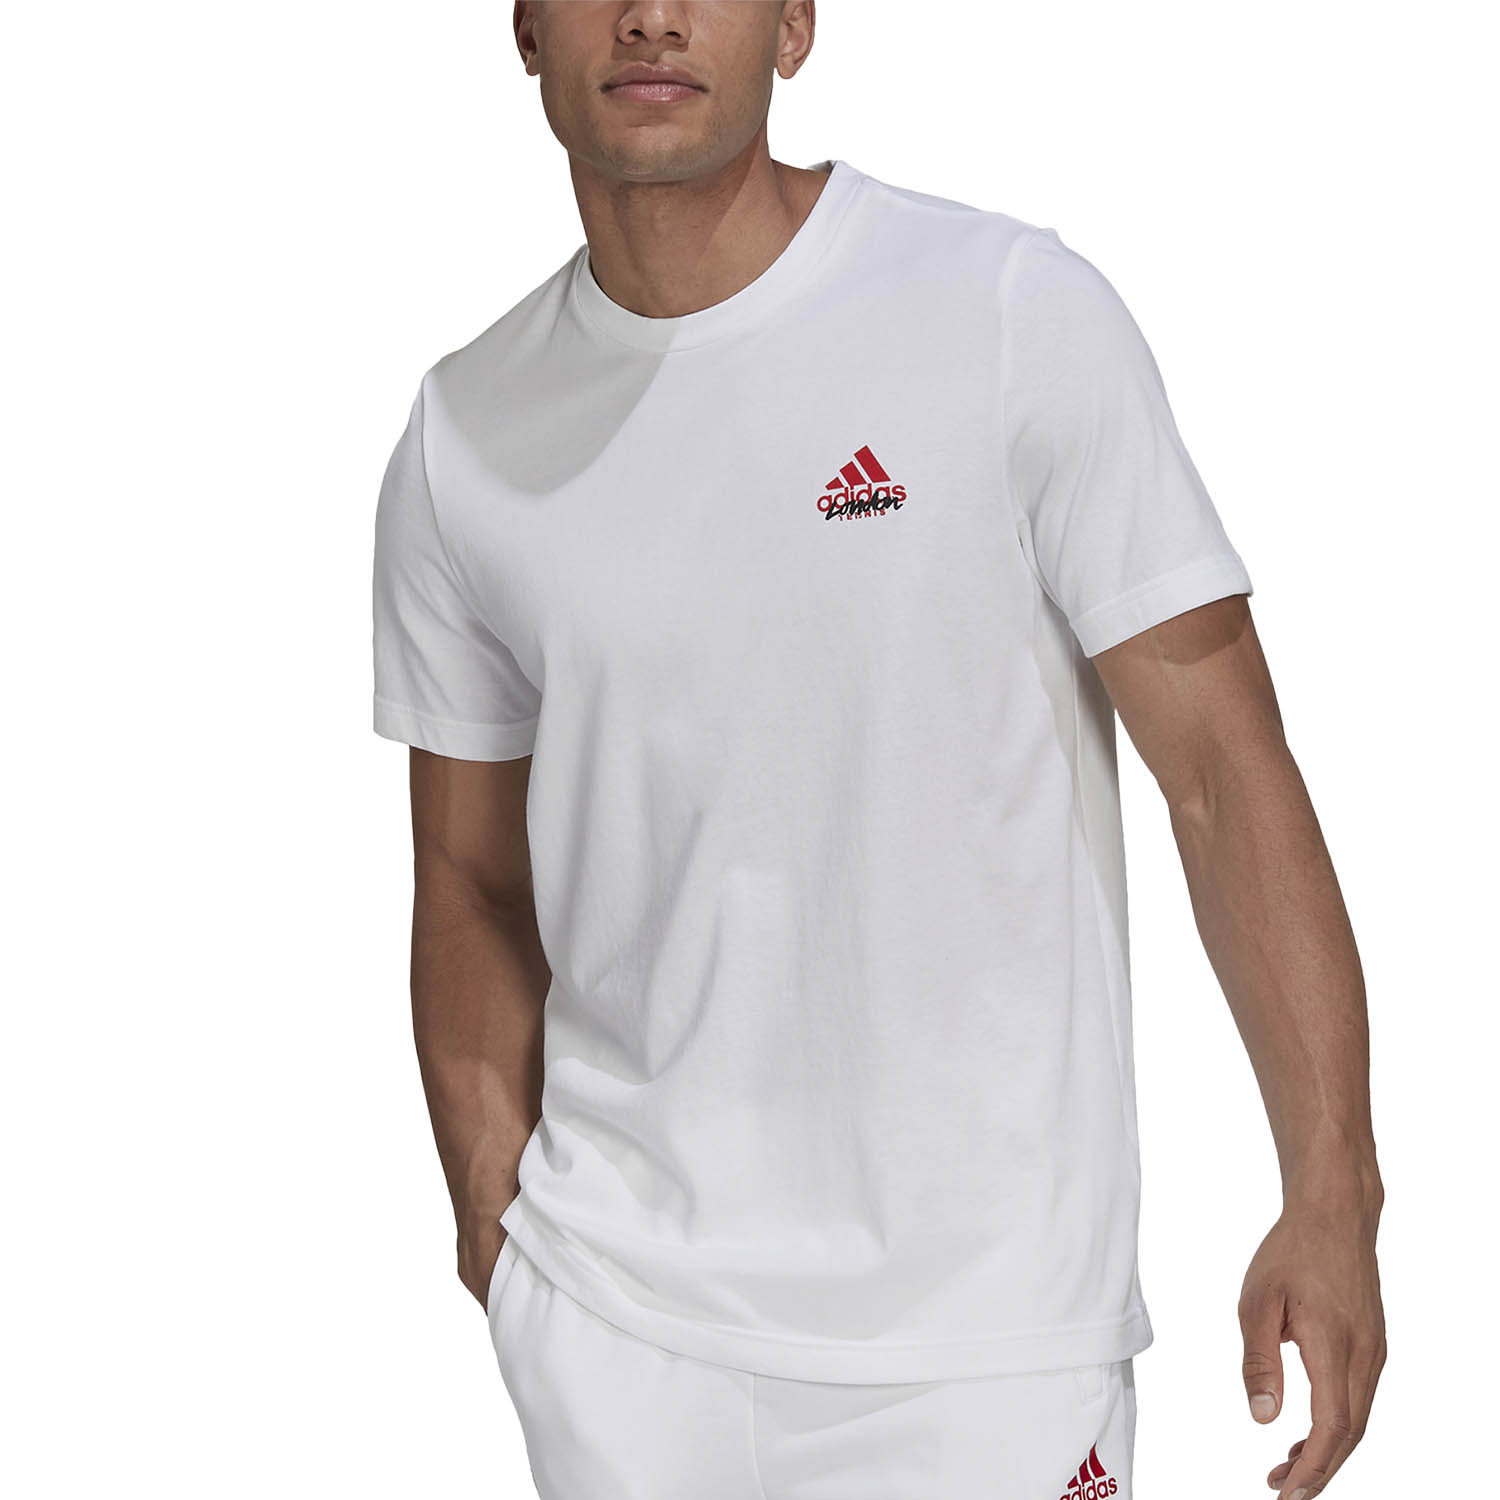 Adidas London Graphic Men S Tennis T Shirt White